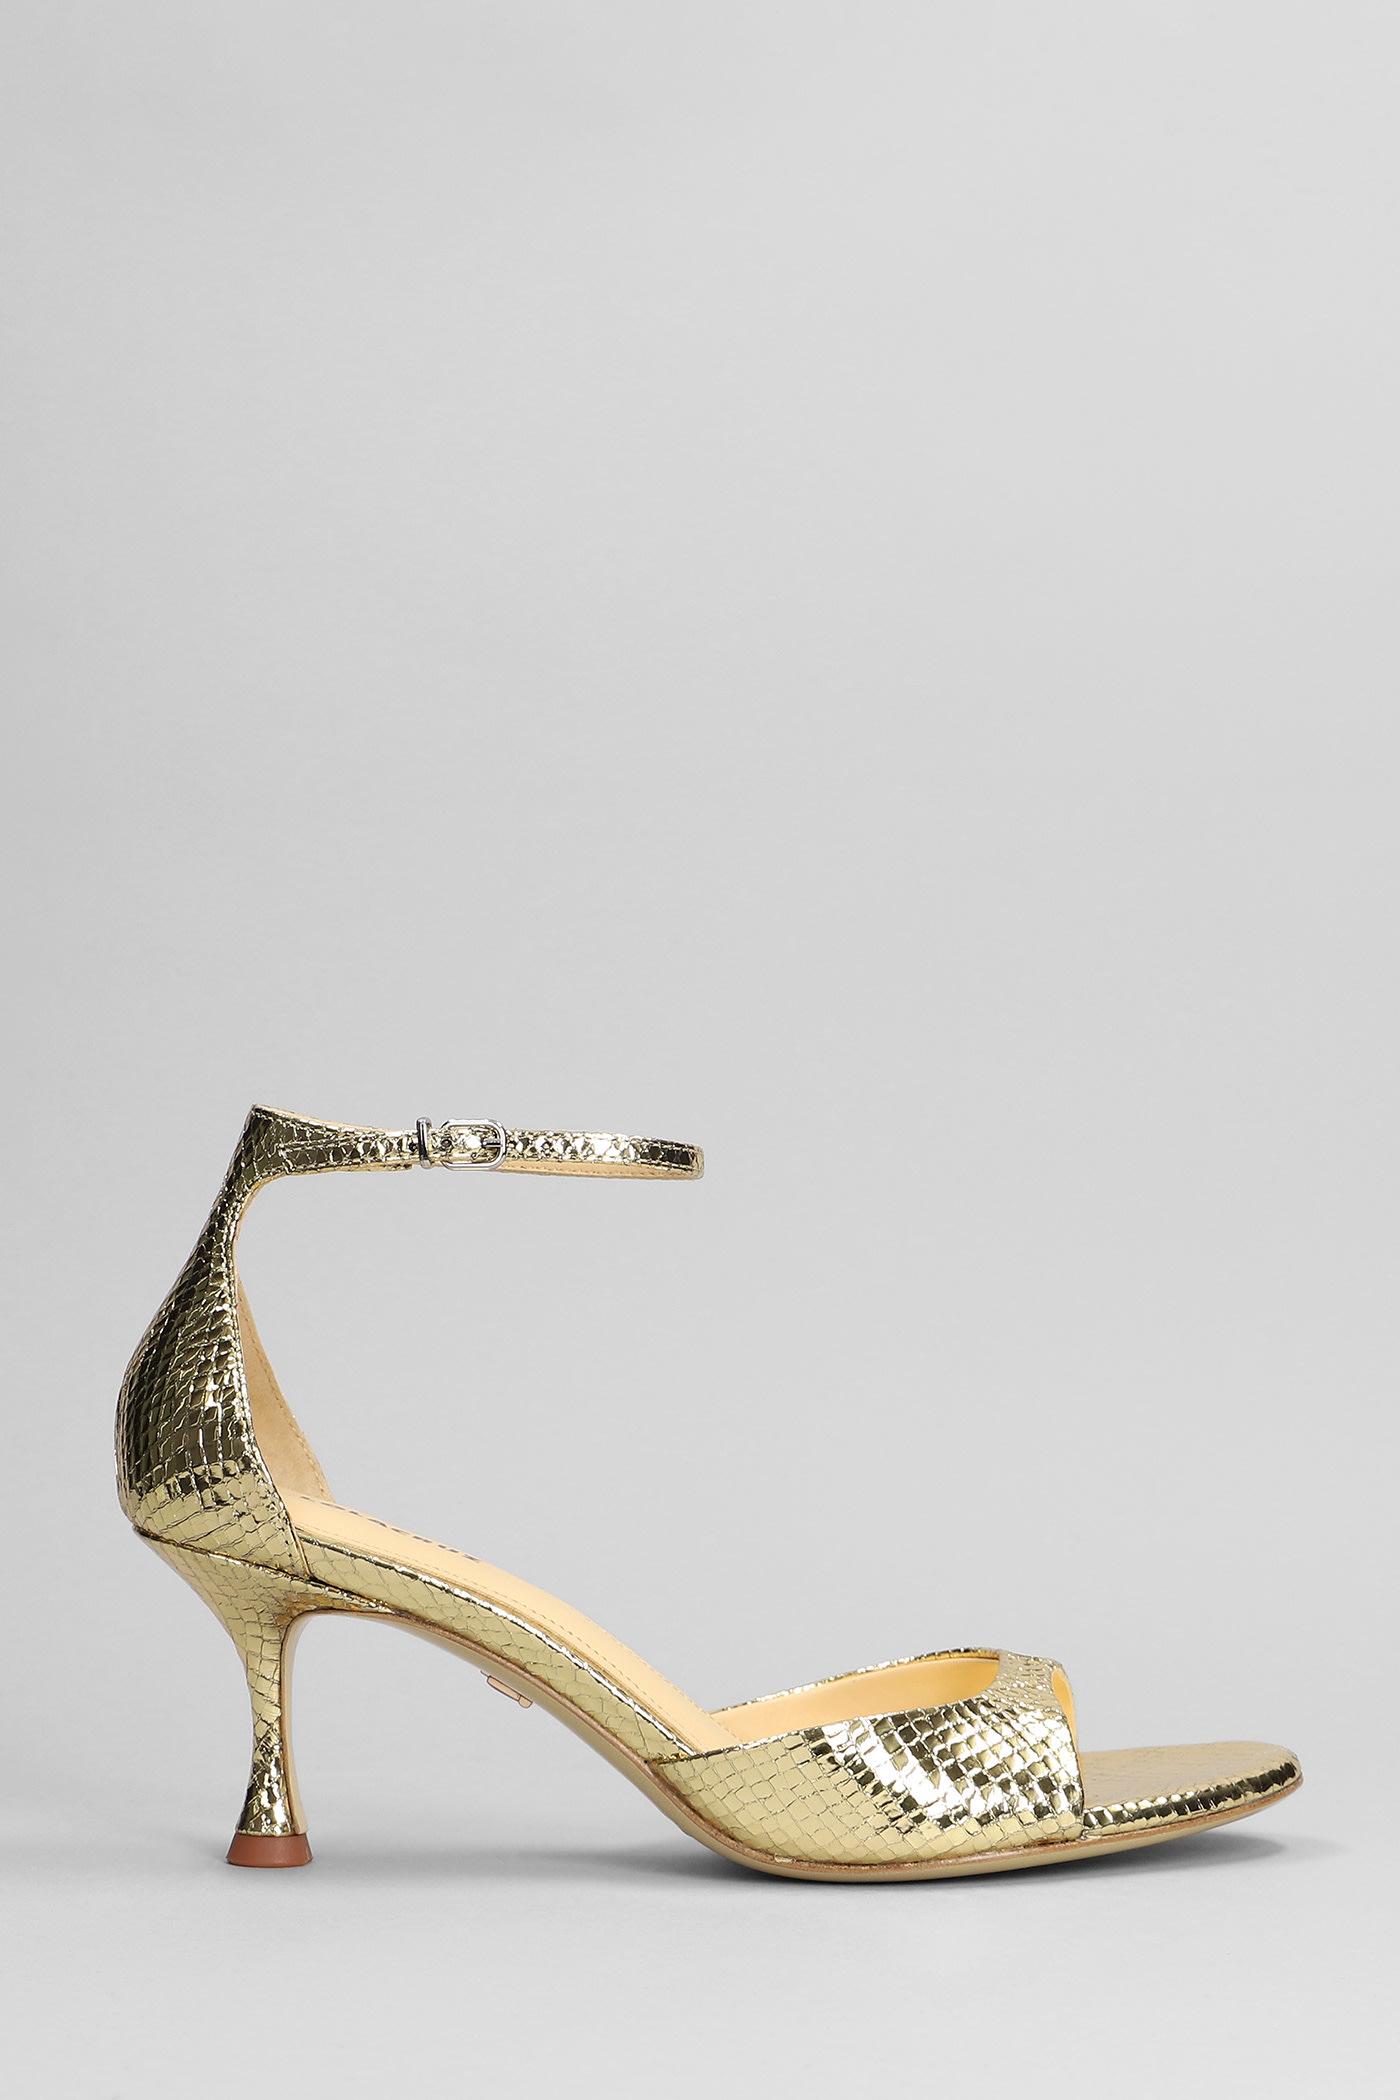 Lola Cruz Sandals In Gold Leather in Metallic | Lyst